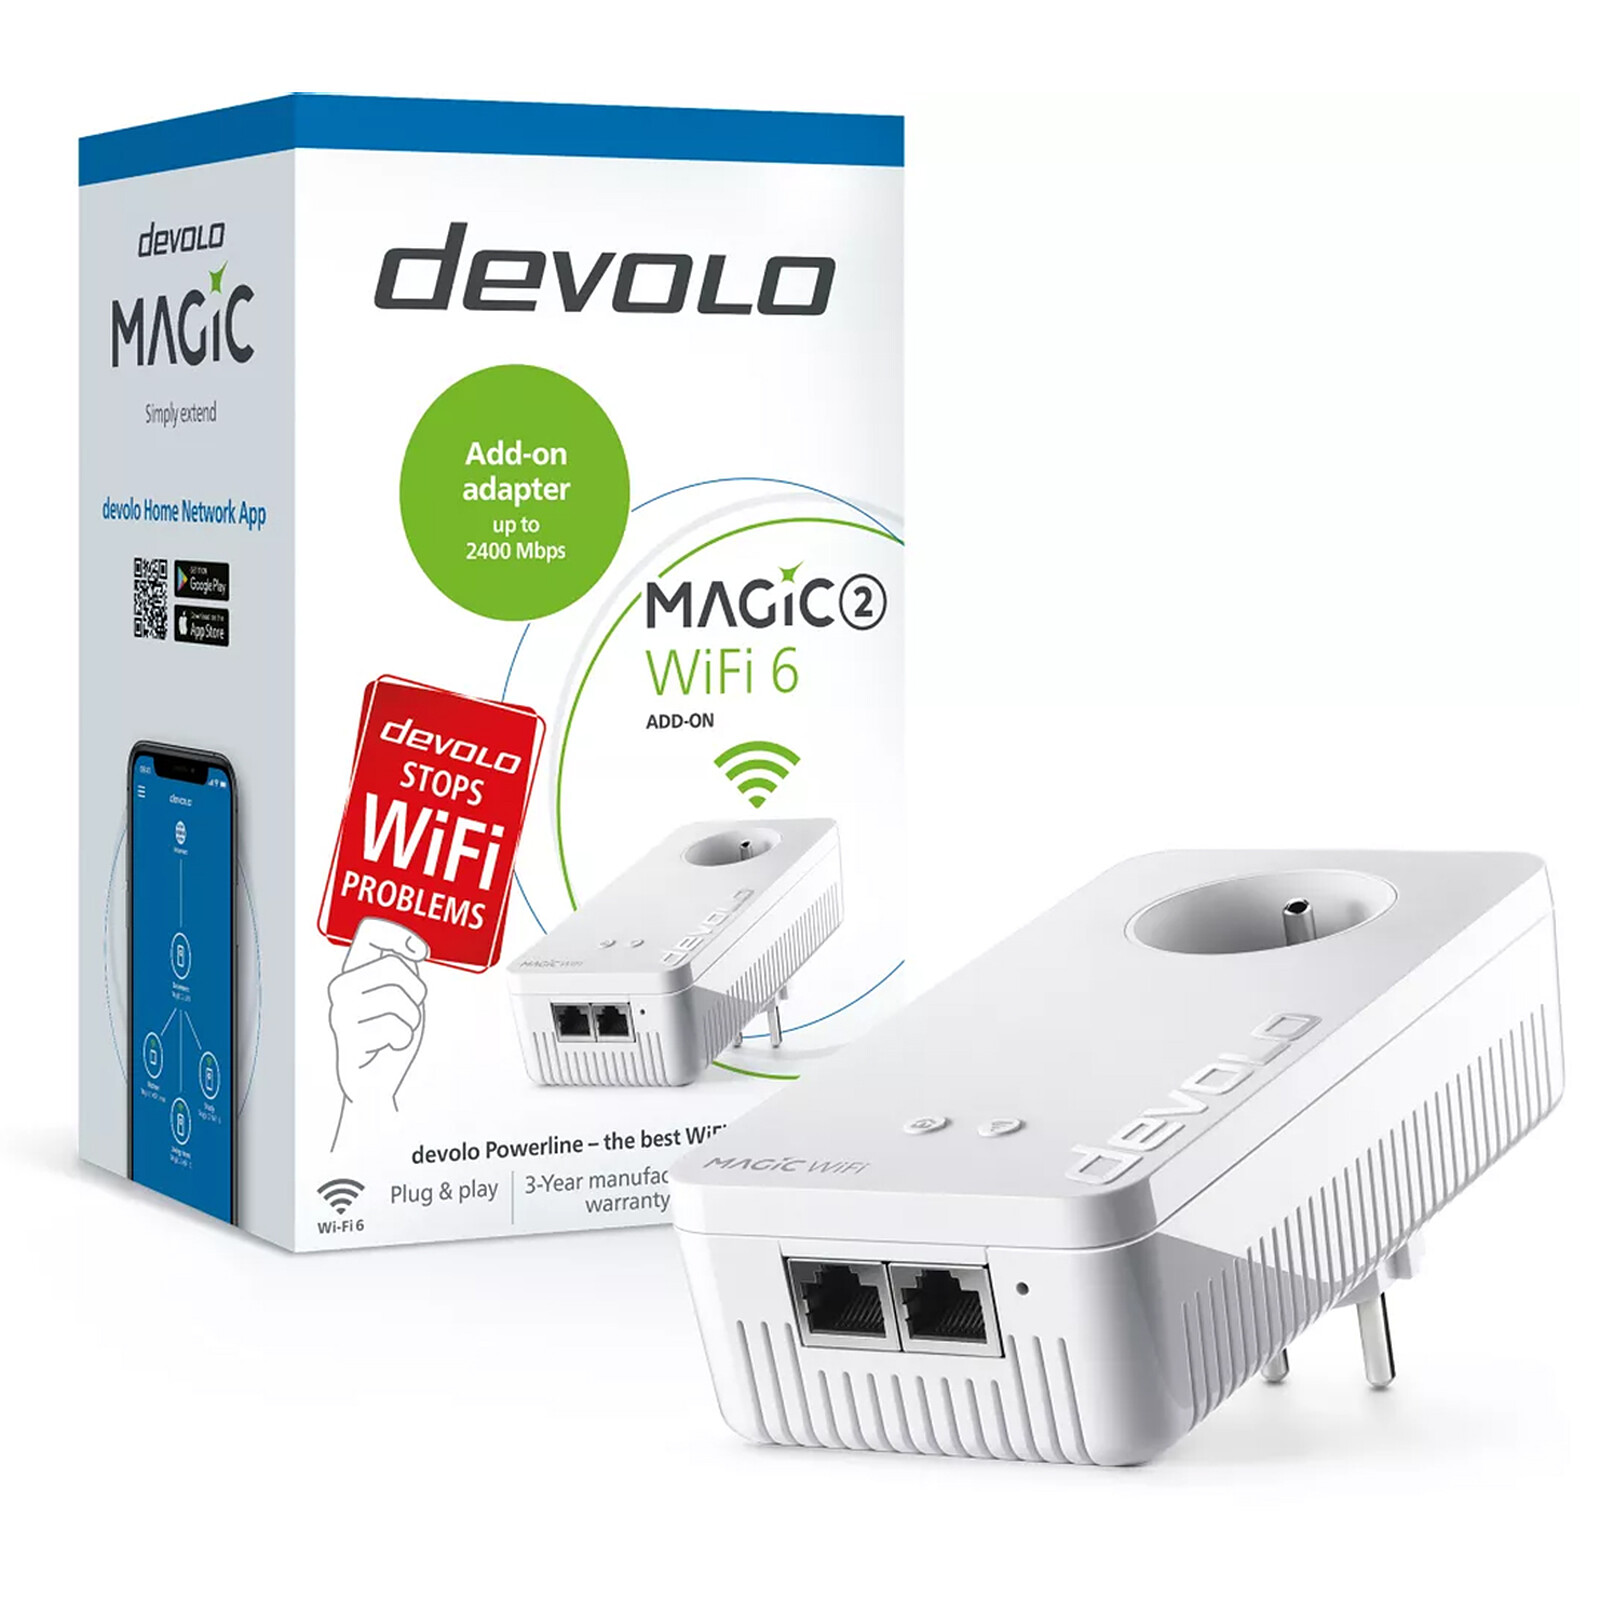 devolo Magic 1 LAN + devolo Magic 1 Wi-Fi (pack de 2) - CPL - LDLC